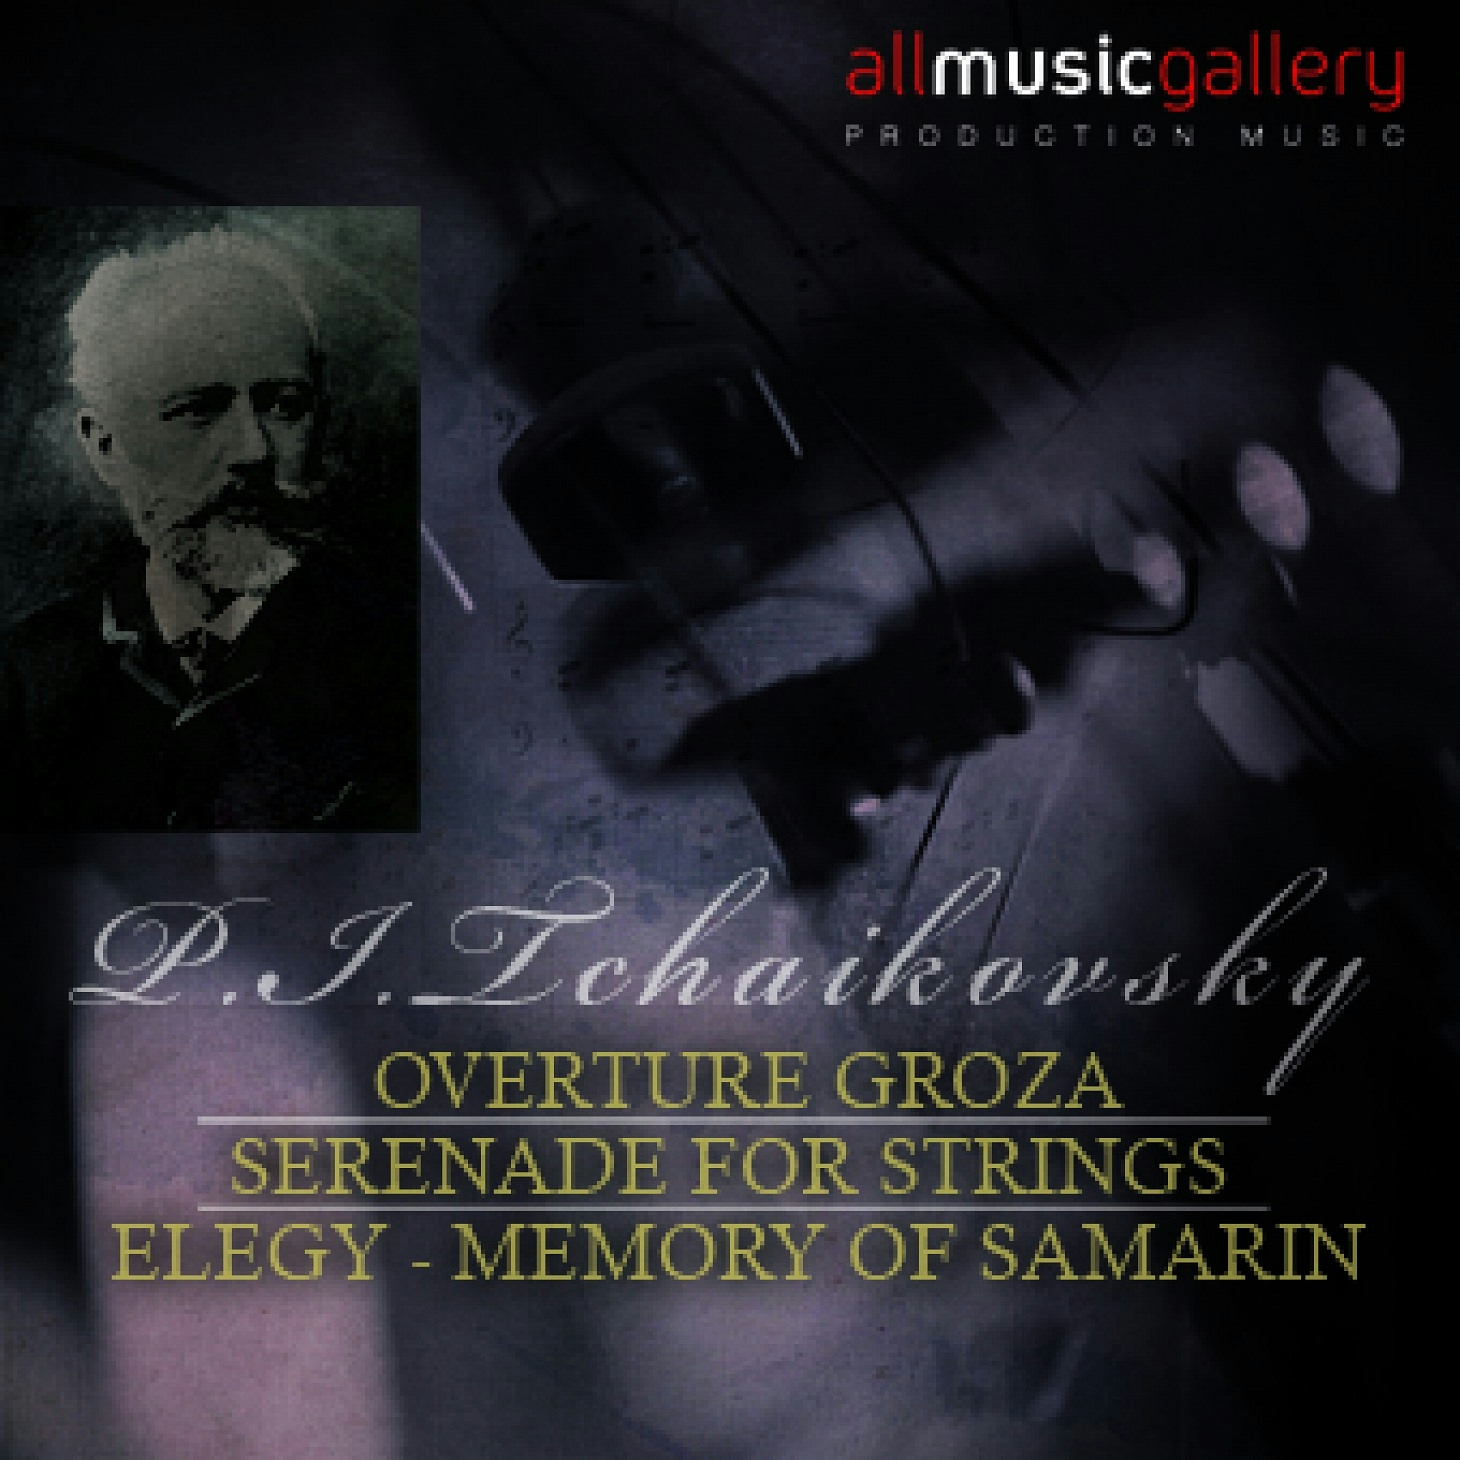 Tchaikovsky - Overture Groza/Serenade for strings/Elegy - Memory of Samarin